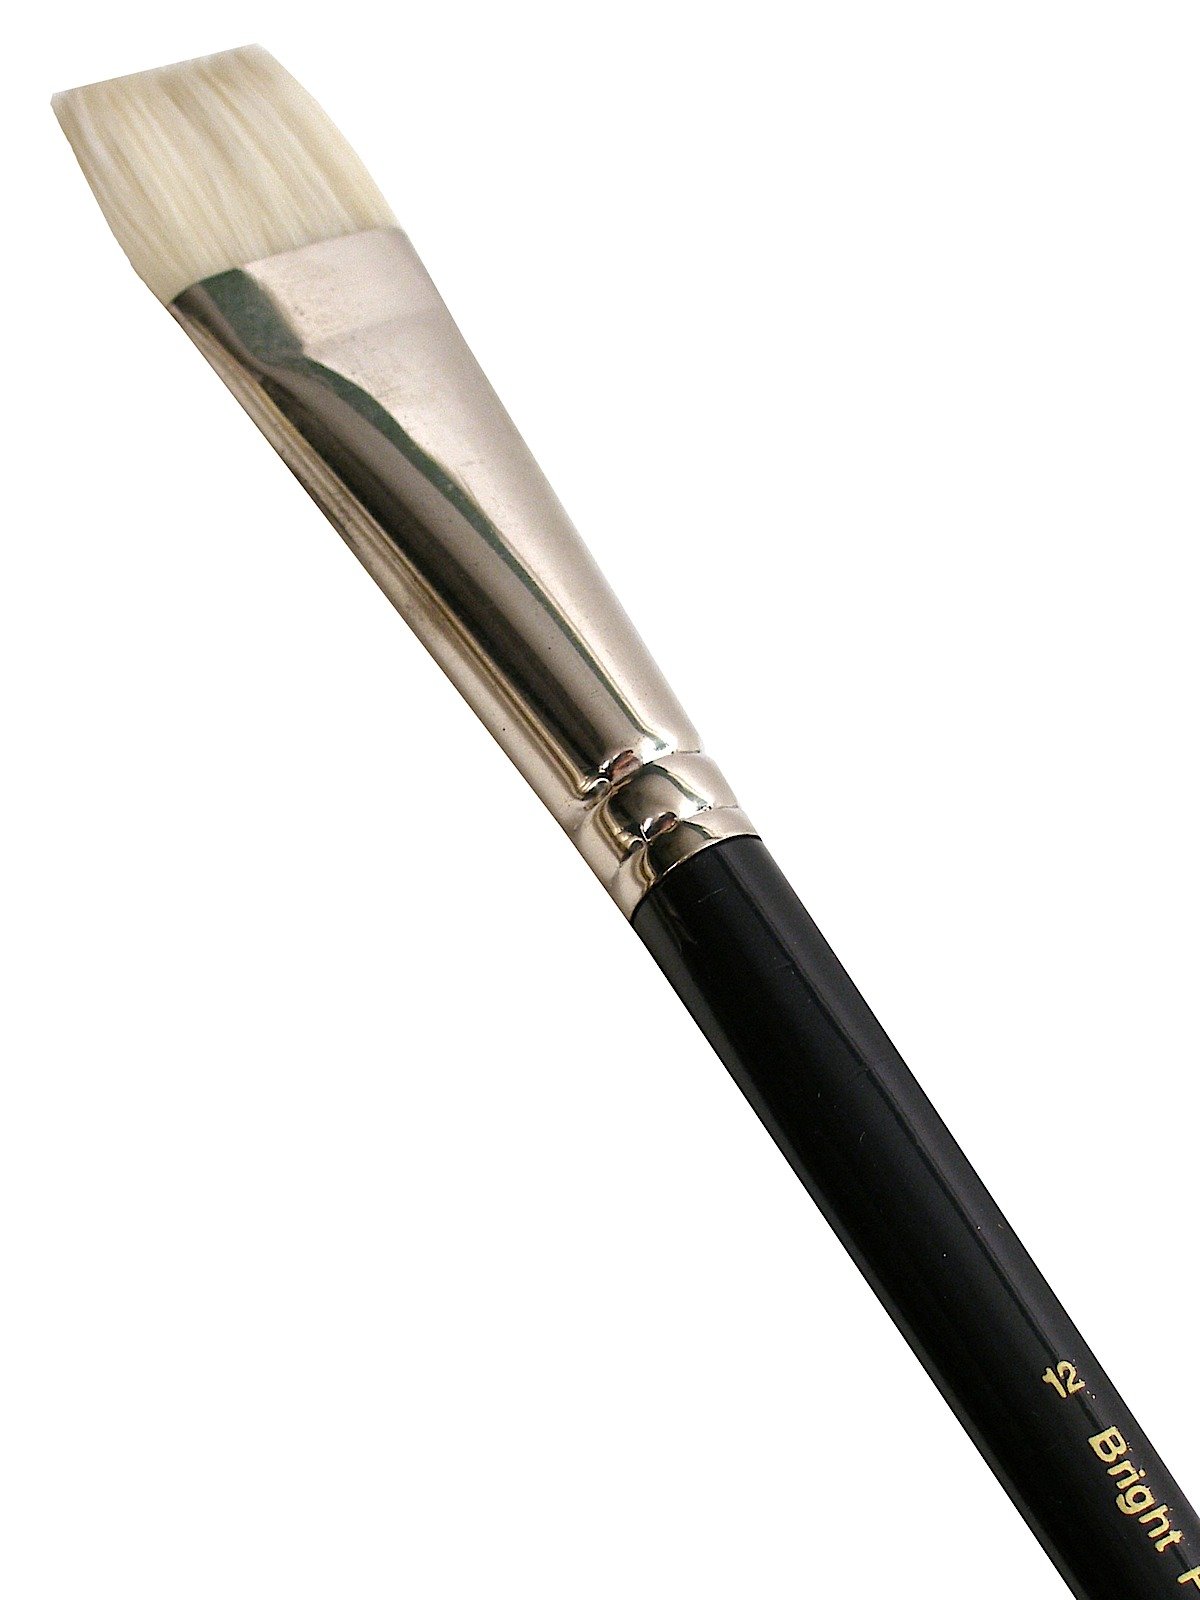 Princeton - Series 5200 Ashley Long Handle Bristle Brushes